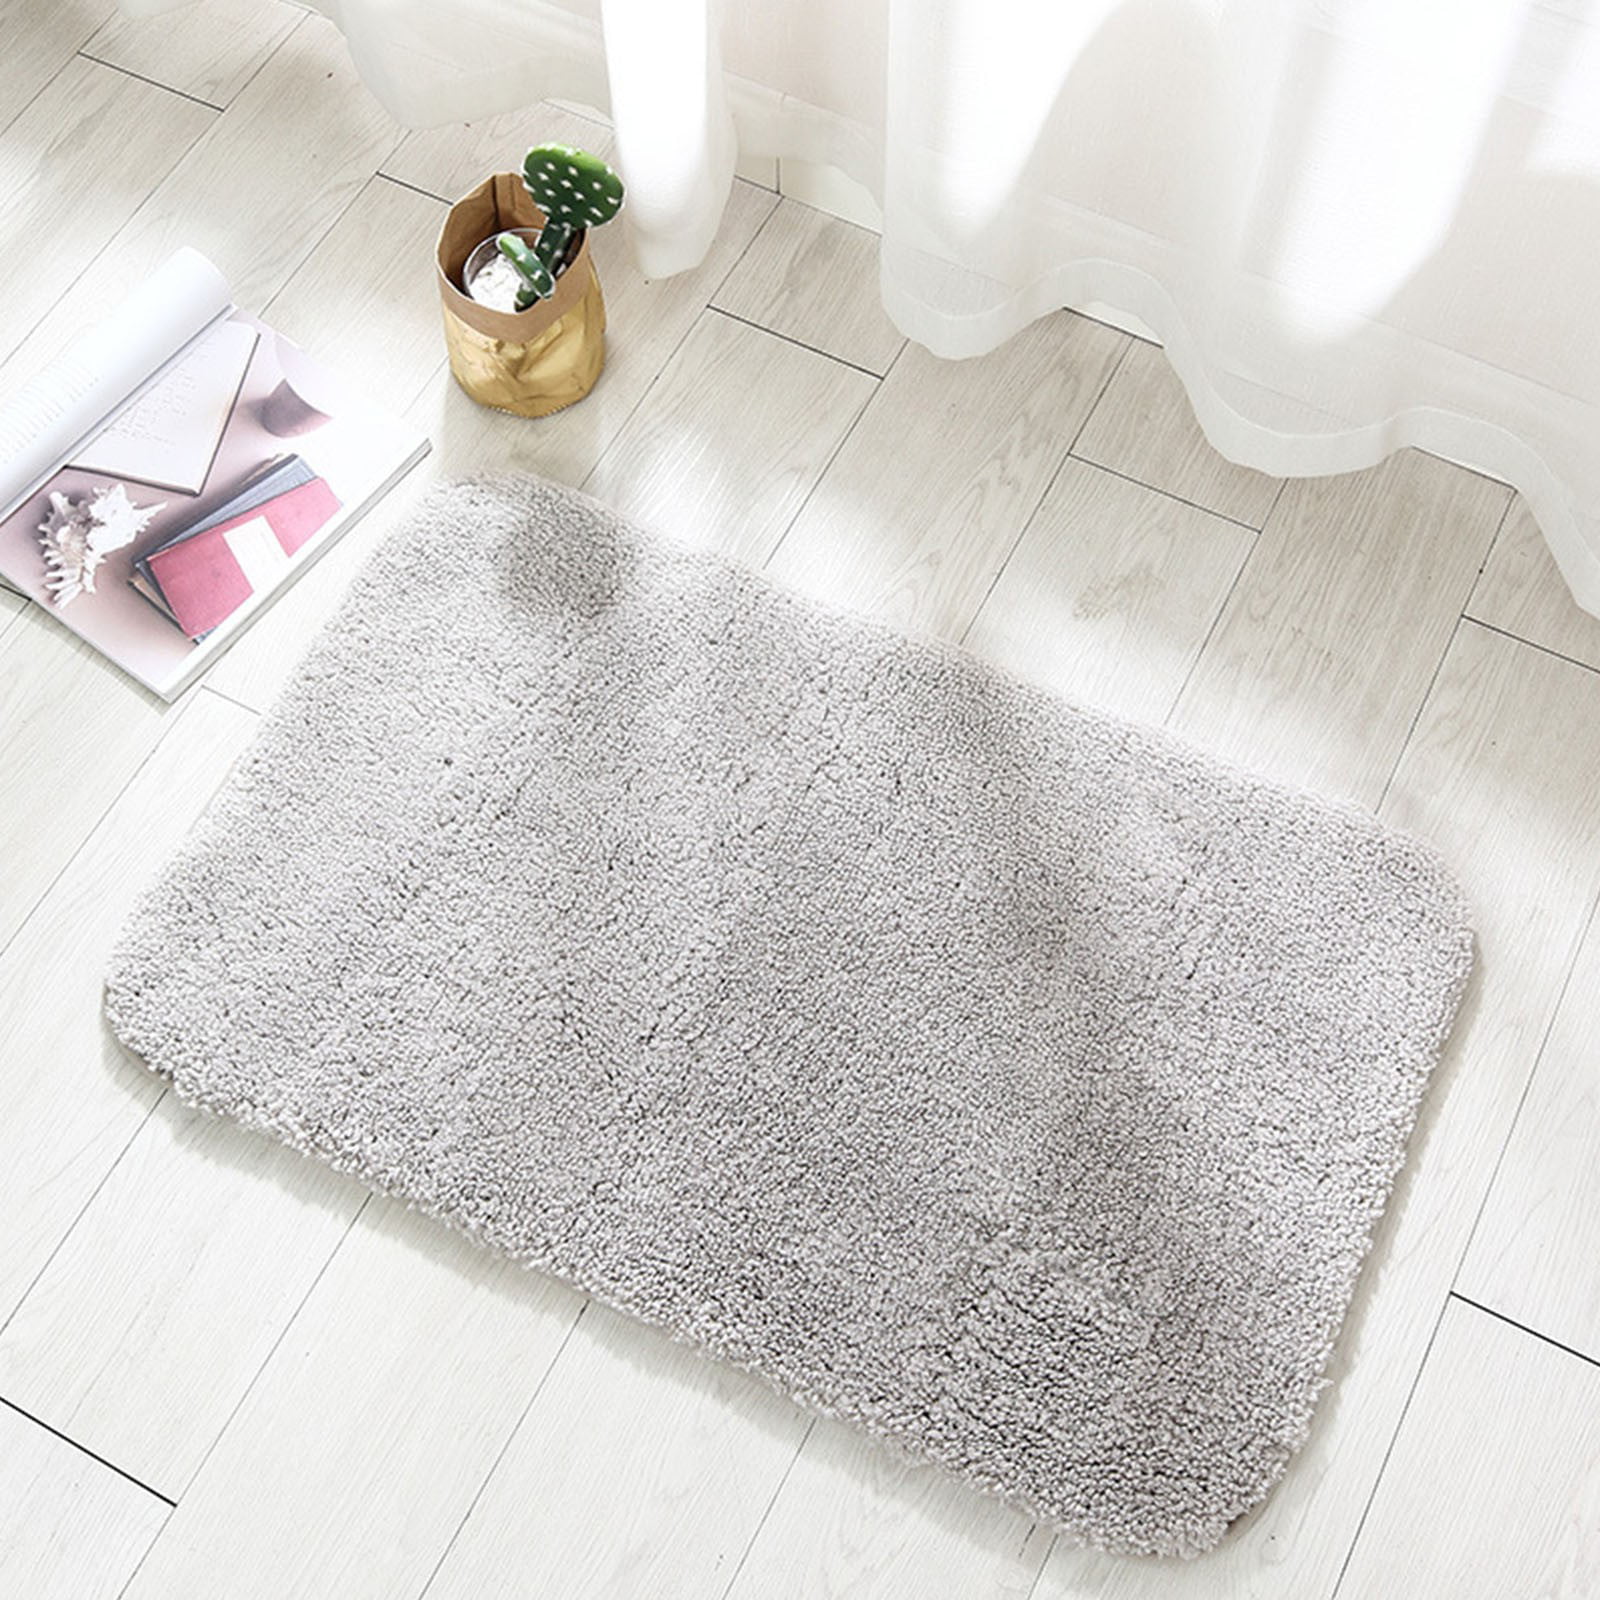 40*60cm Soft Cotton U Shaped Bath Mats Anti Slip Home Decor Bathroom Carpet US 